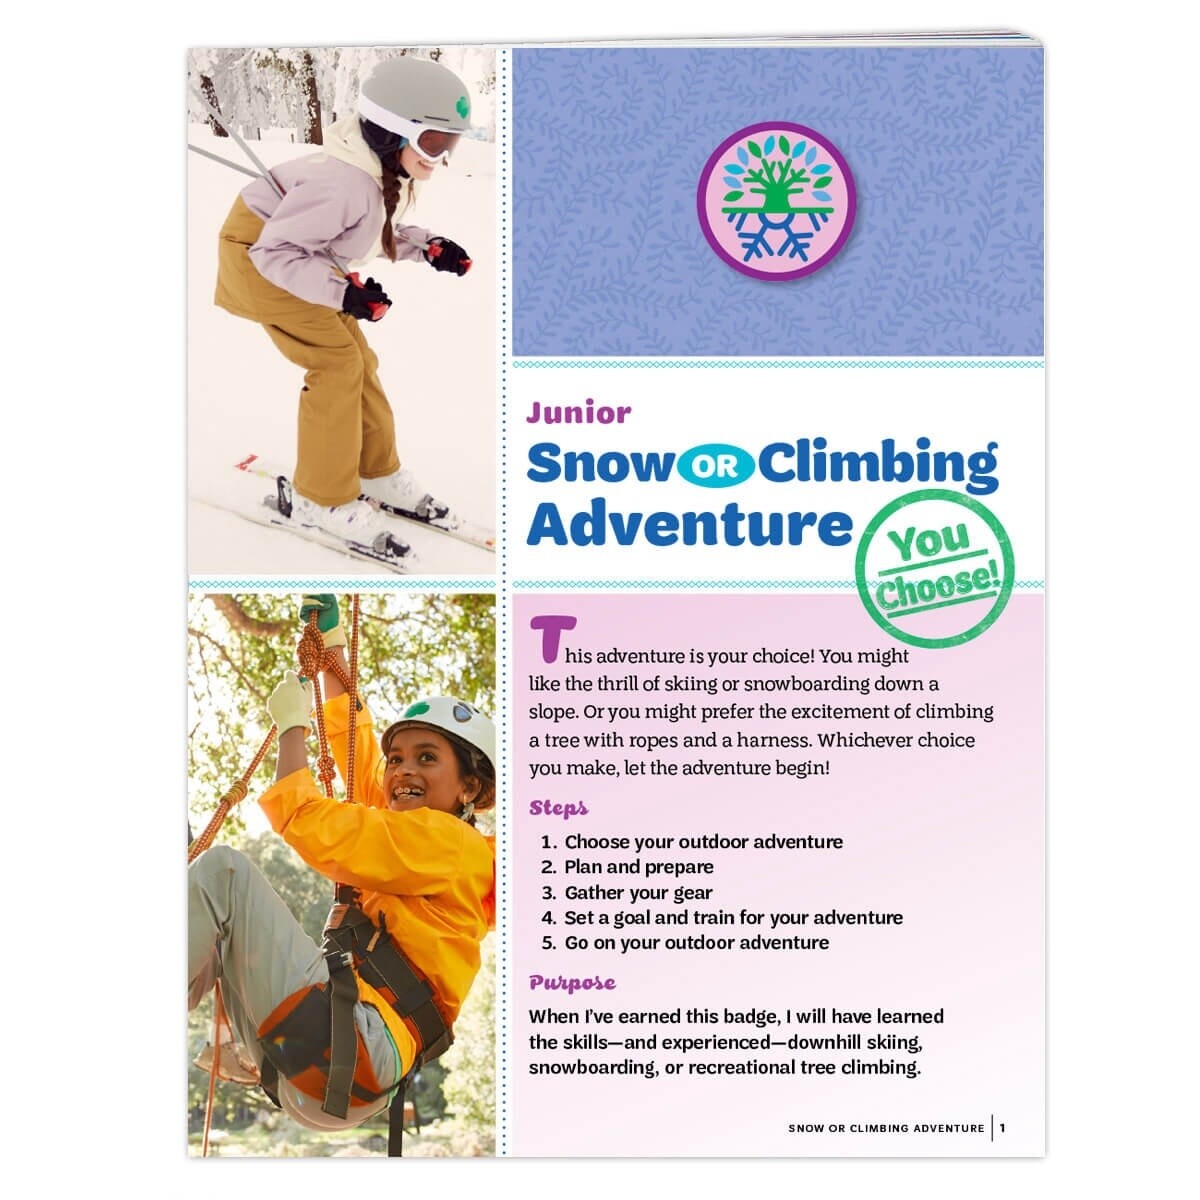 Junior Snow Or Climbing Adventure Badge Requirements